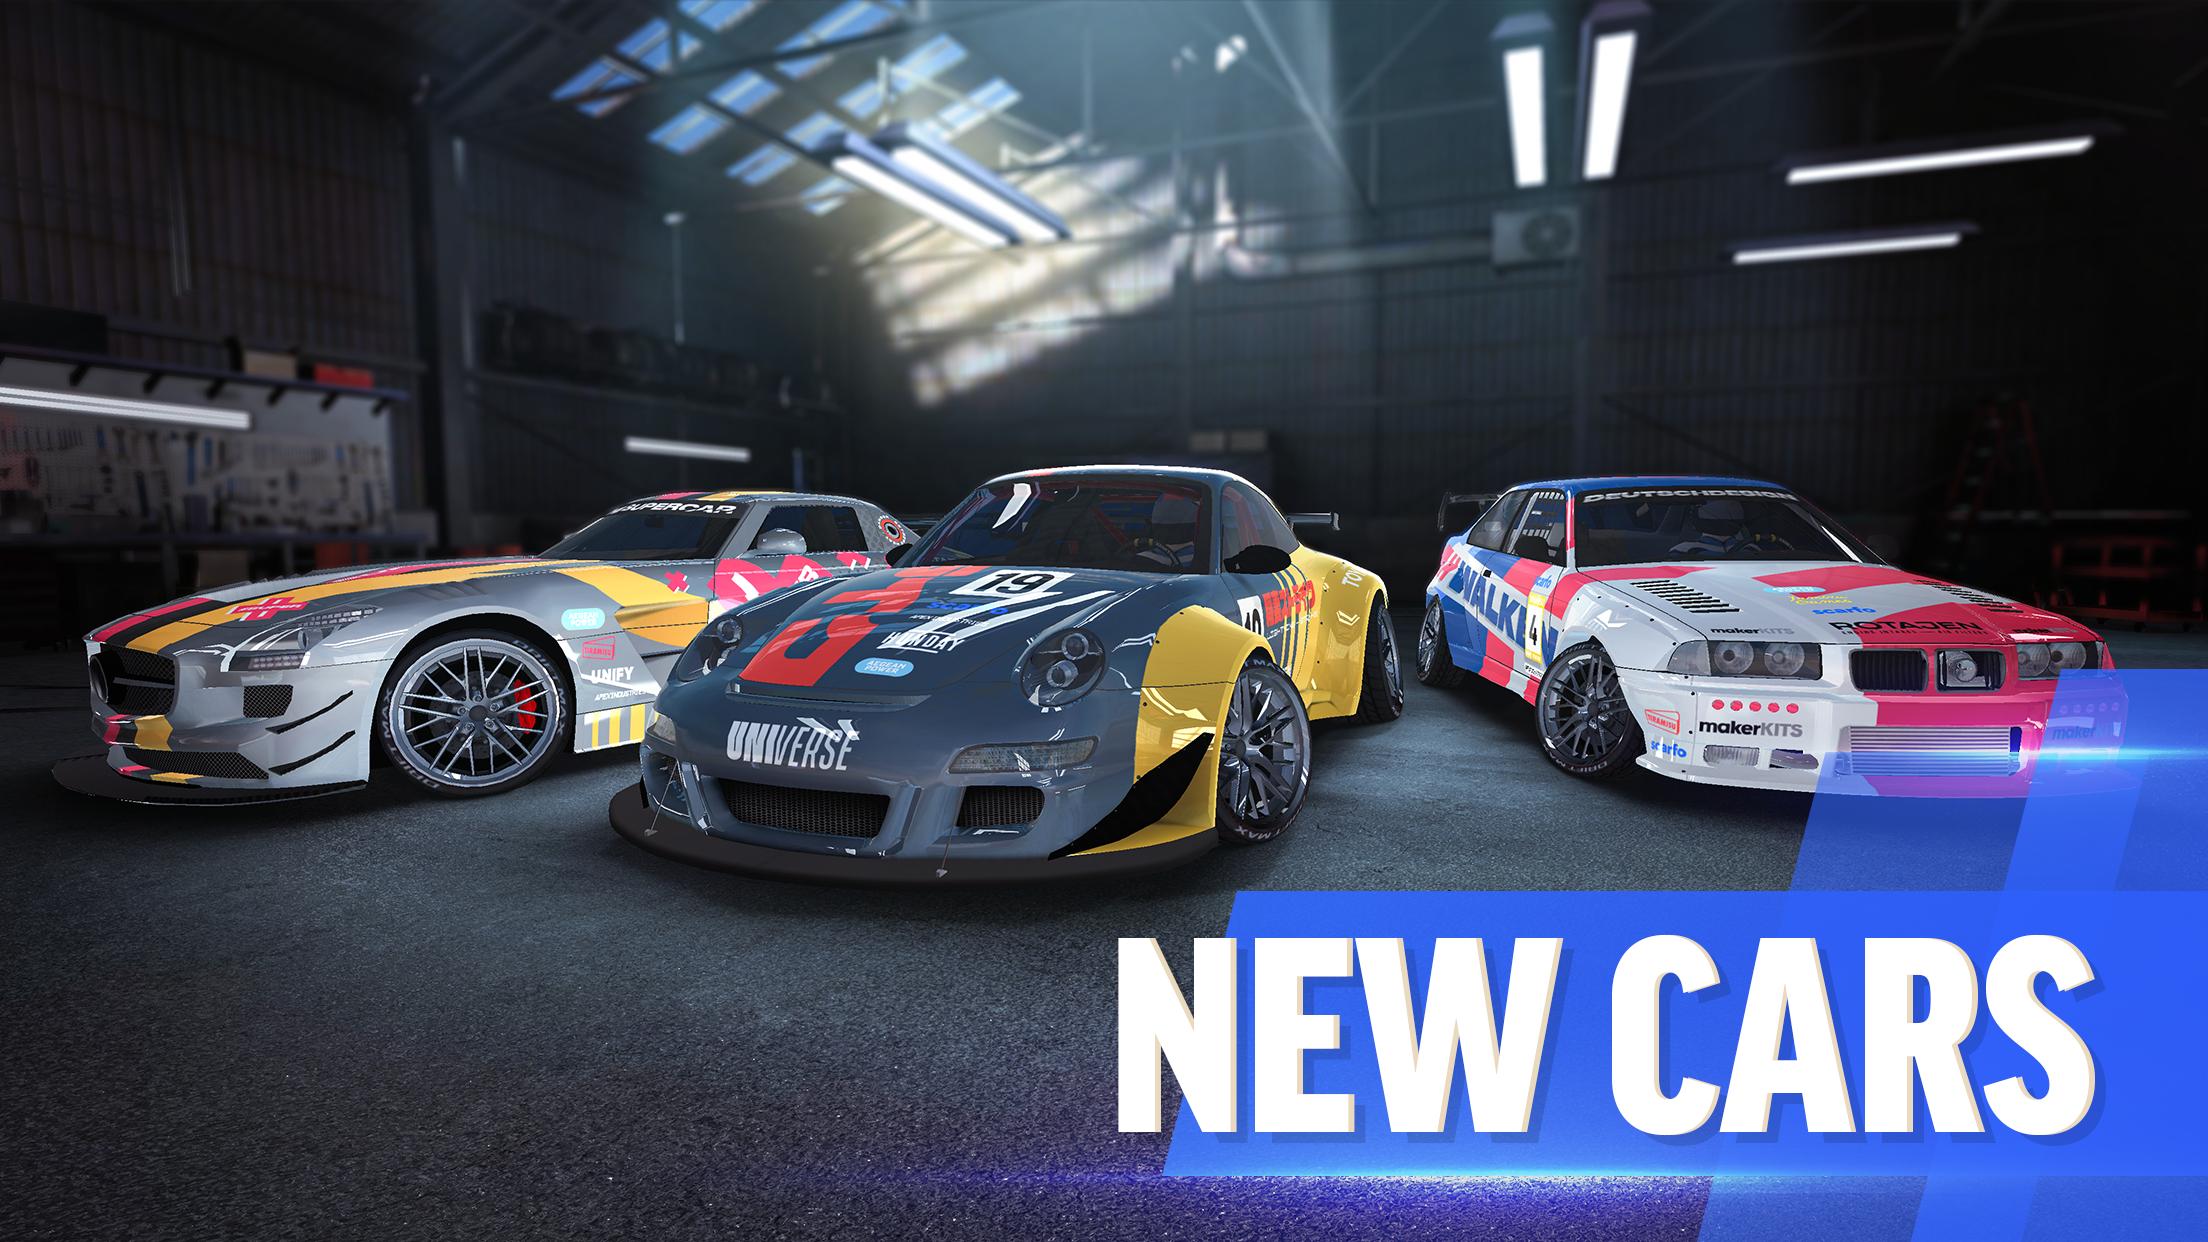 Drift Max Pro Car Drifting Game with Racing Cars 2.4.60 Screenshot 17